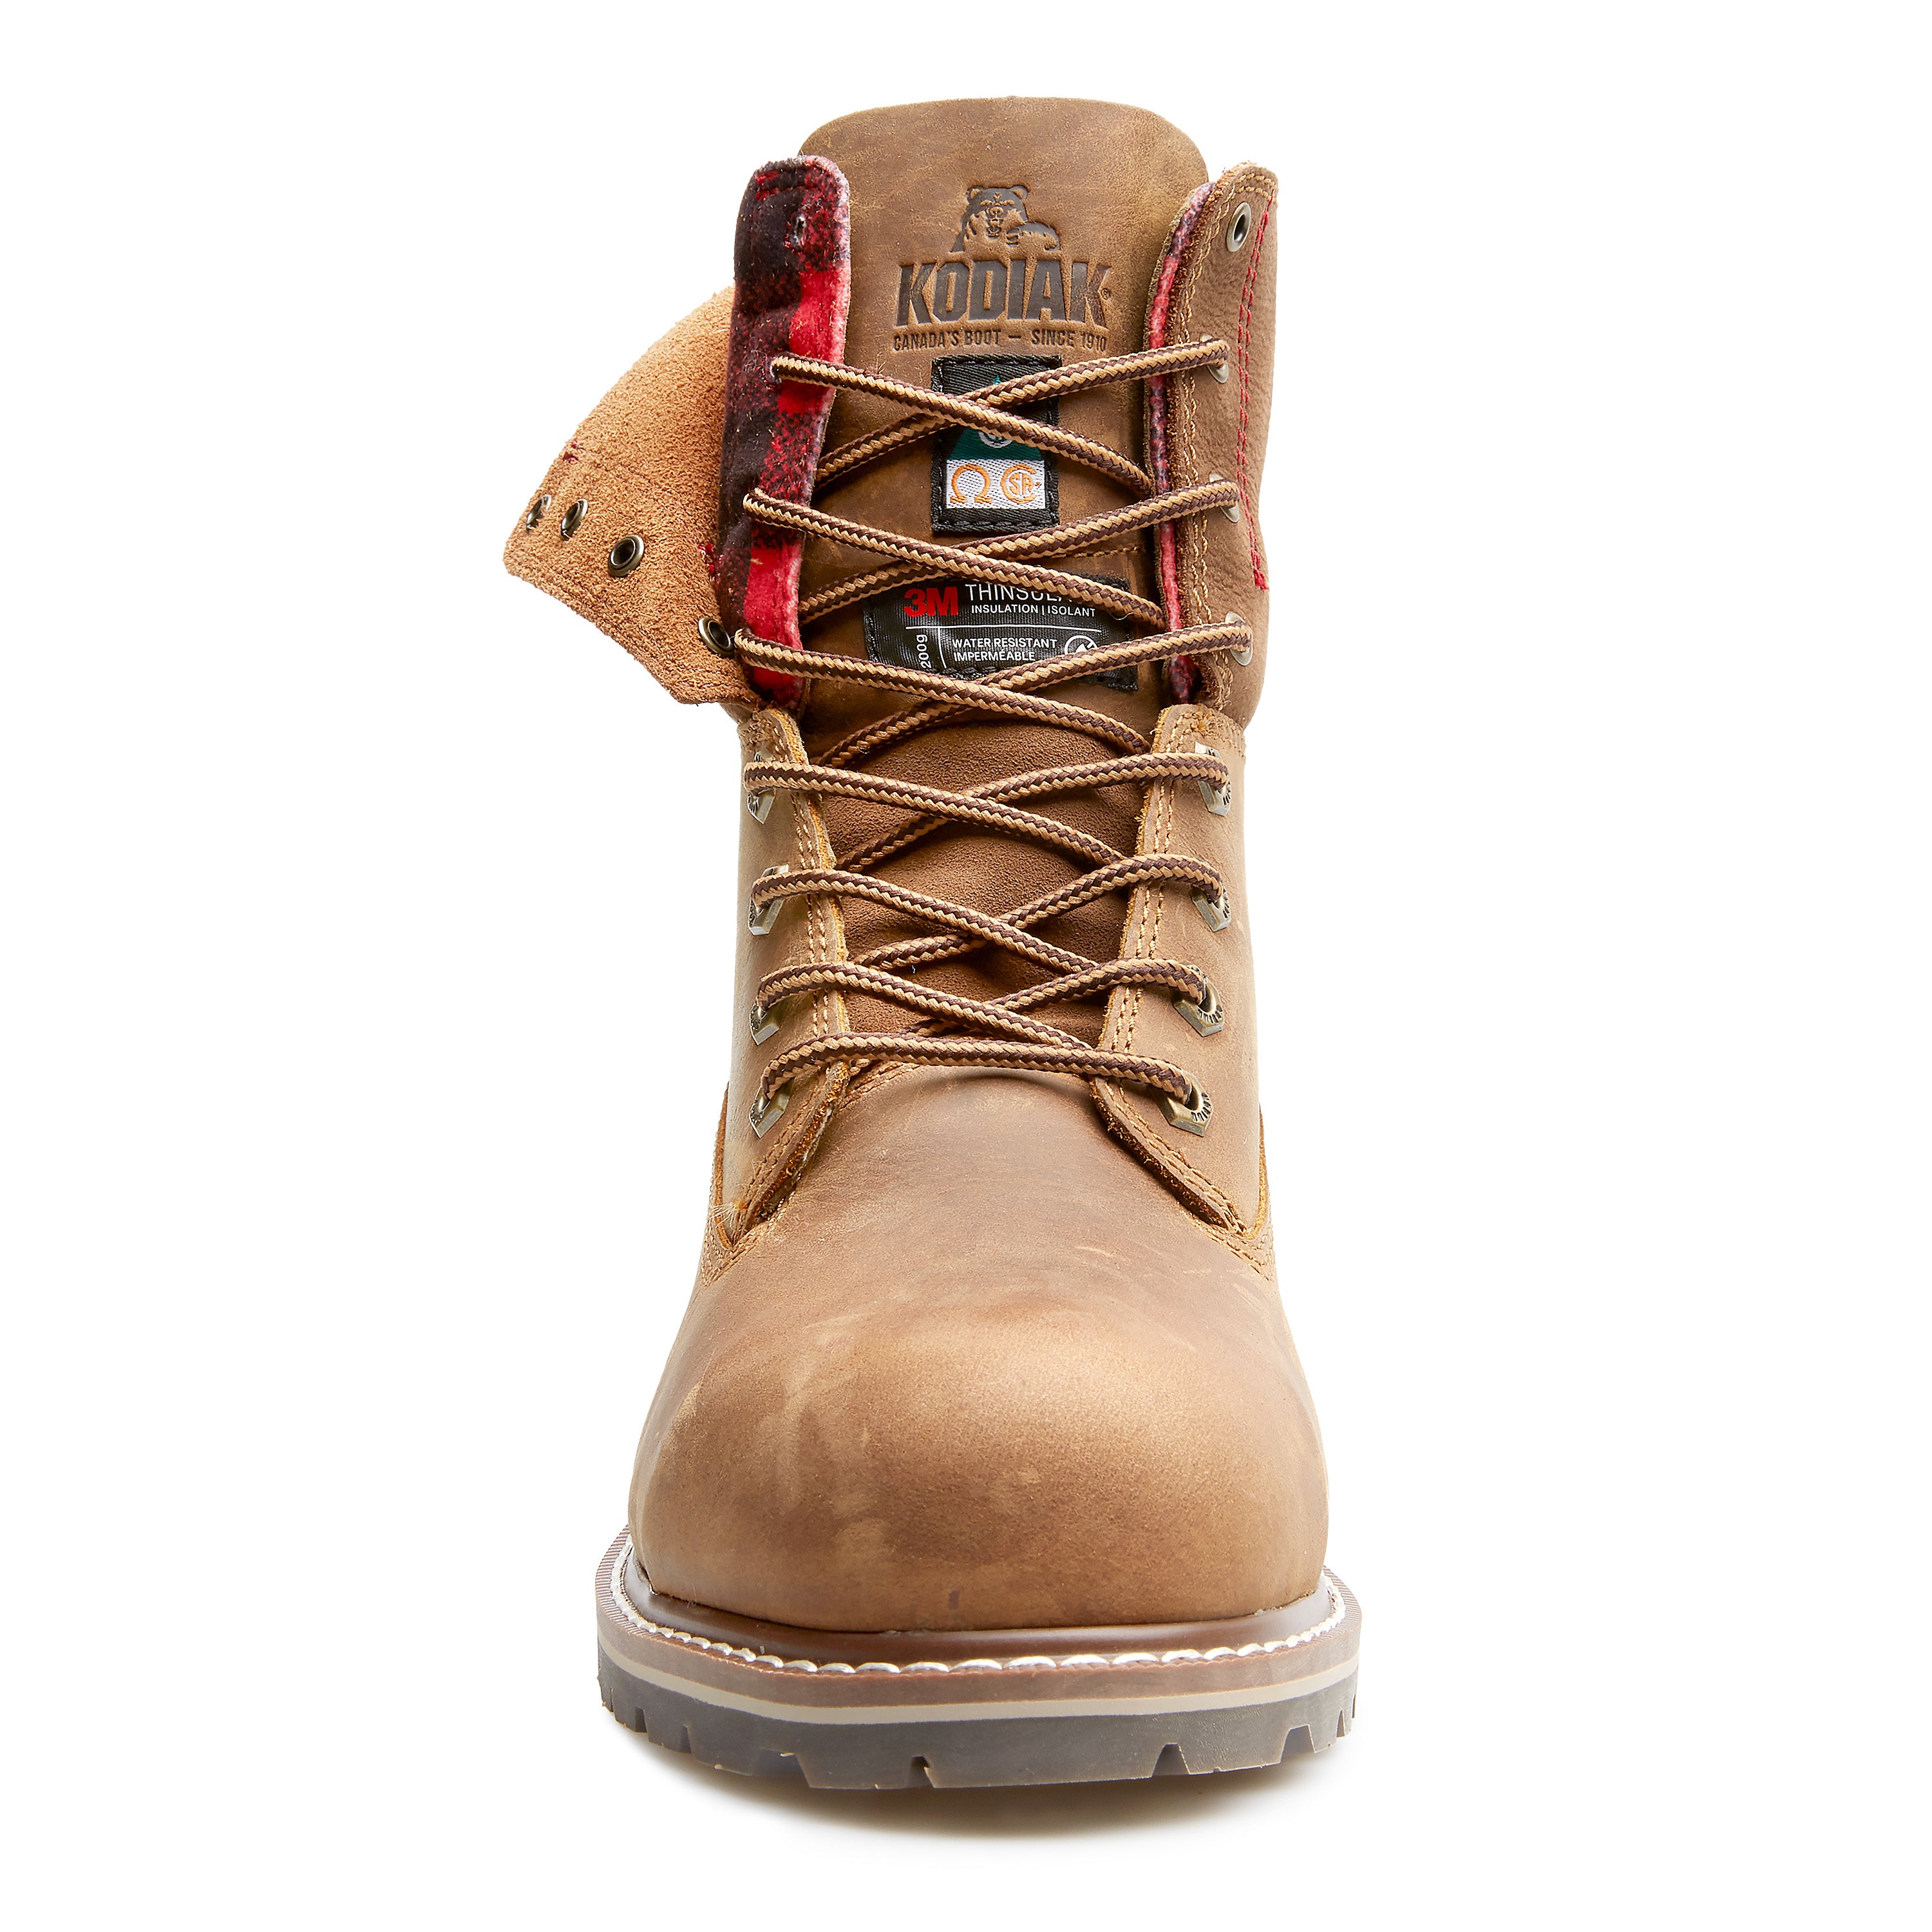 Kodiak Bralorne Composite Toe 8" Women's Safety Boots | Brown | Sizes 5 - 11 Work Boots - Cleanflow